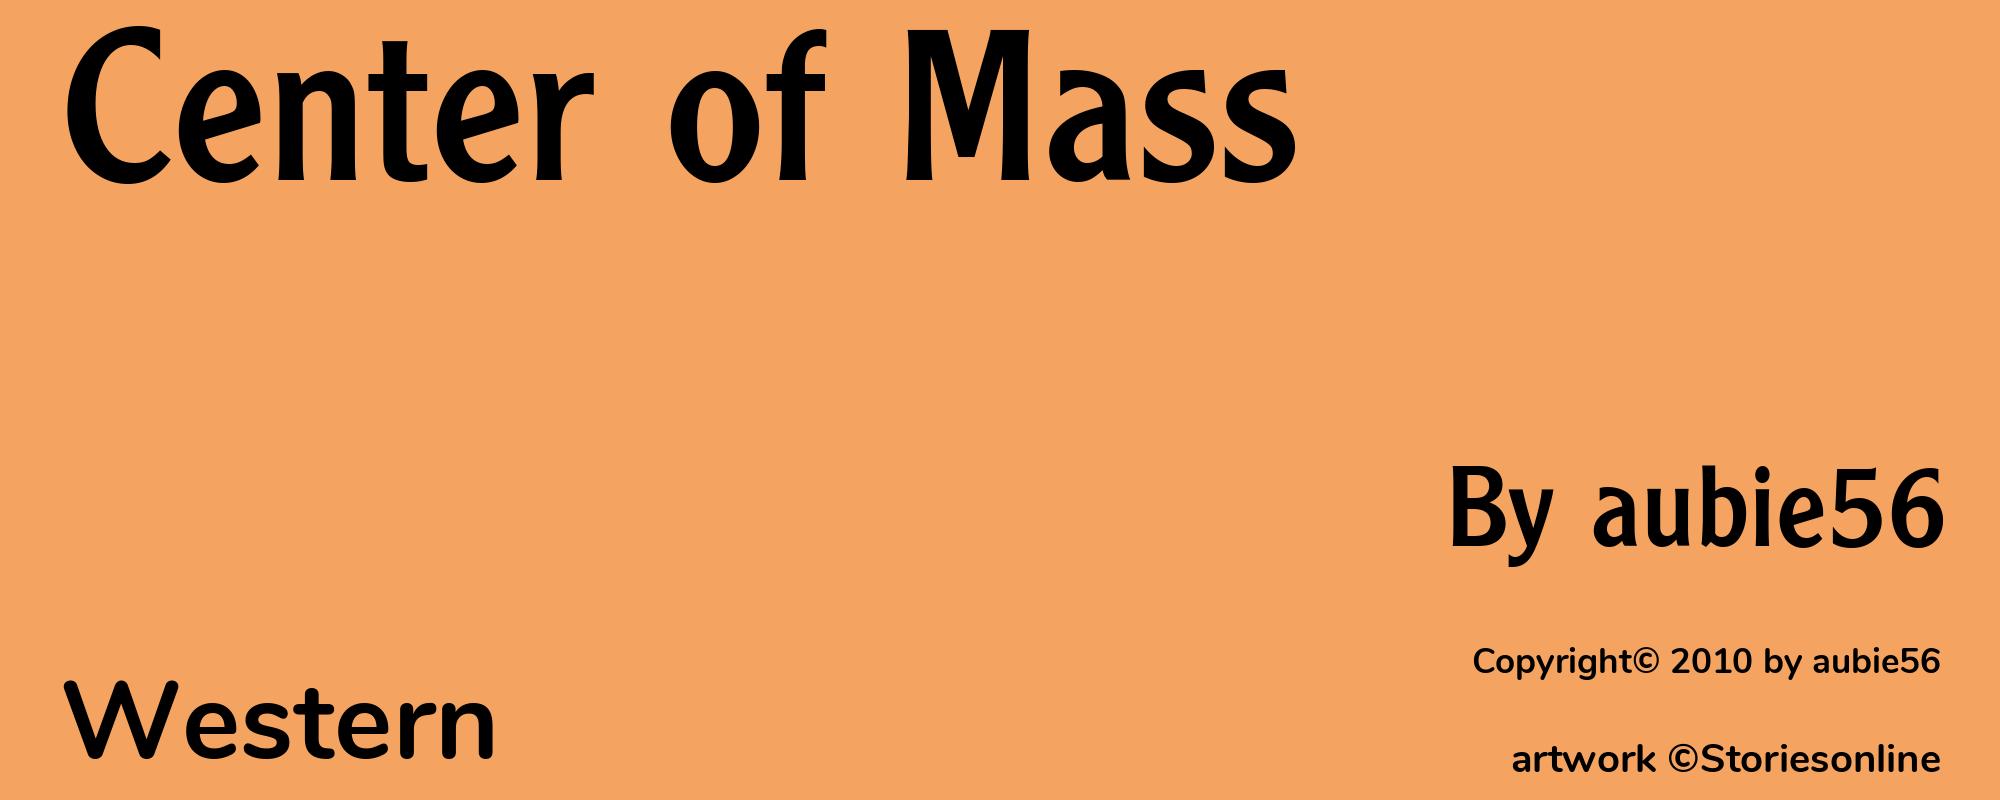 Center of Mass - Cover